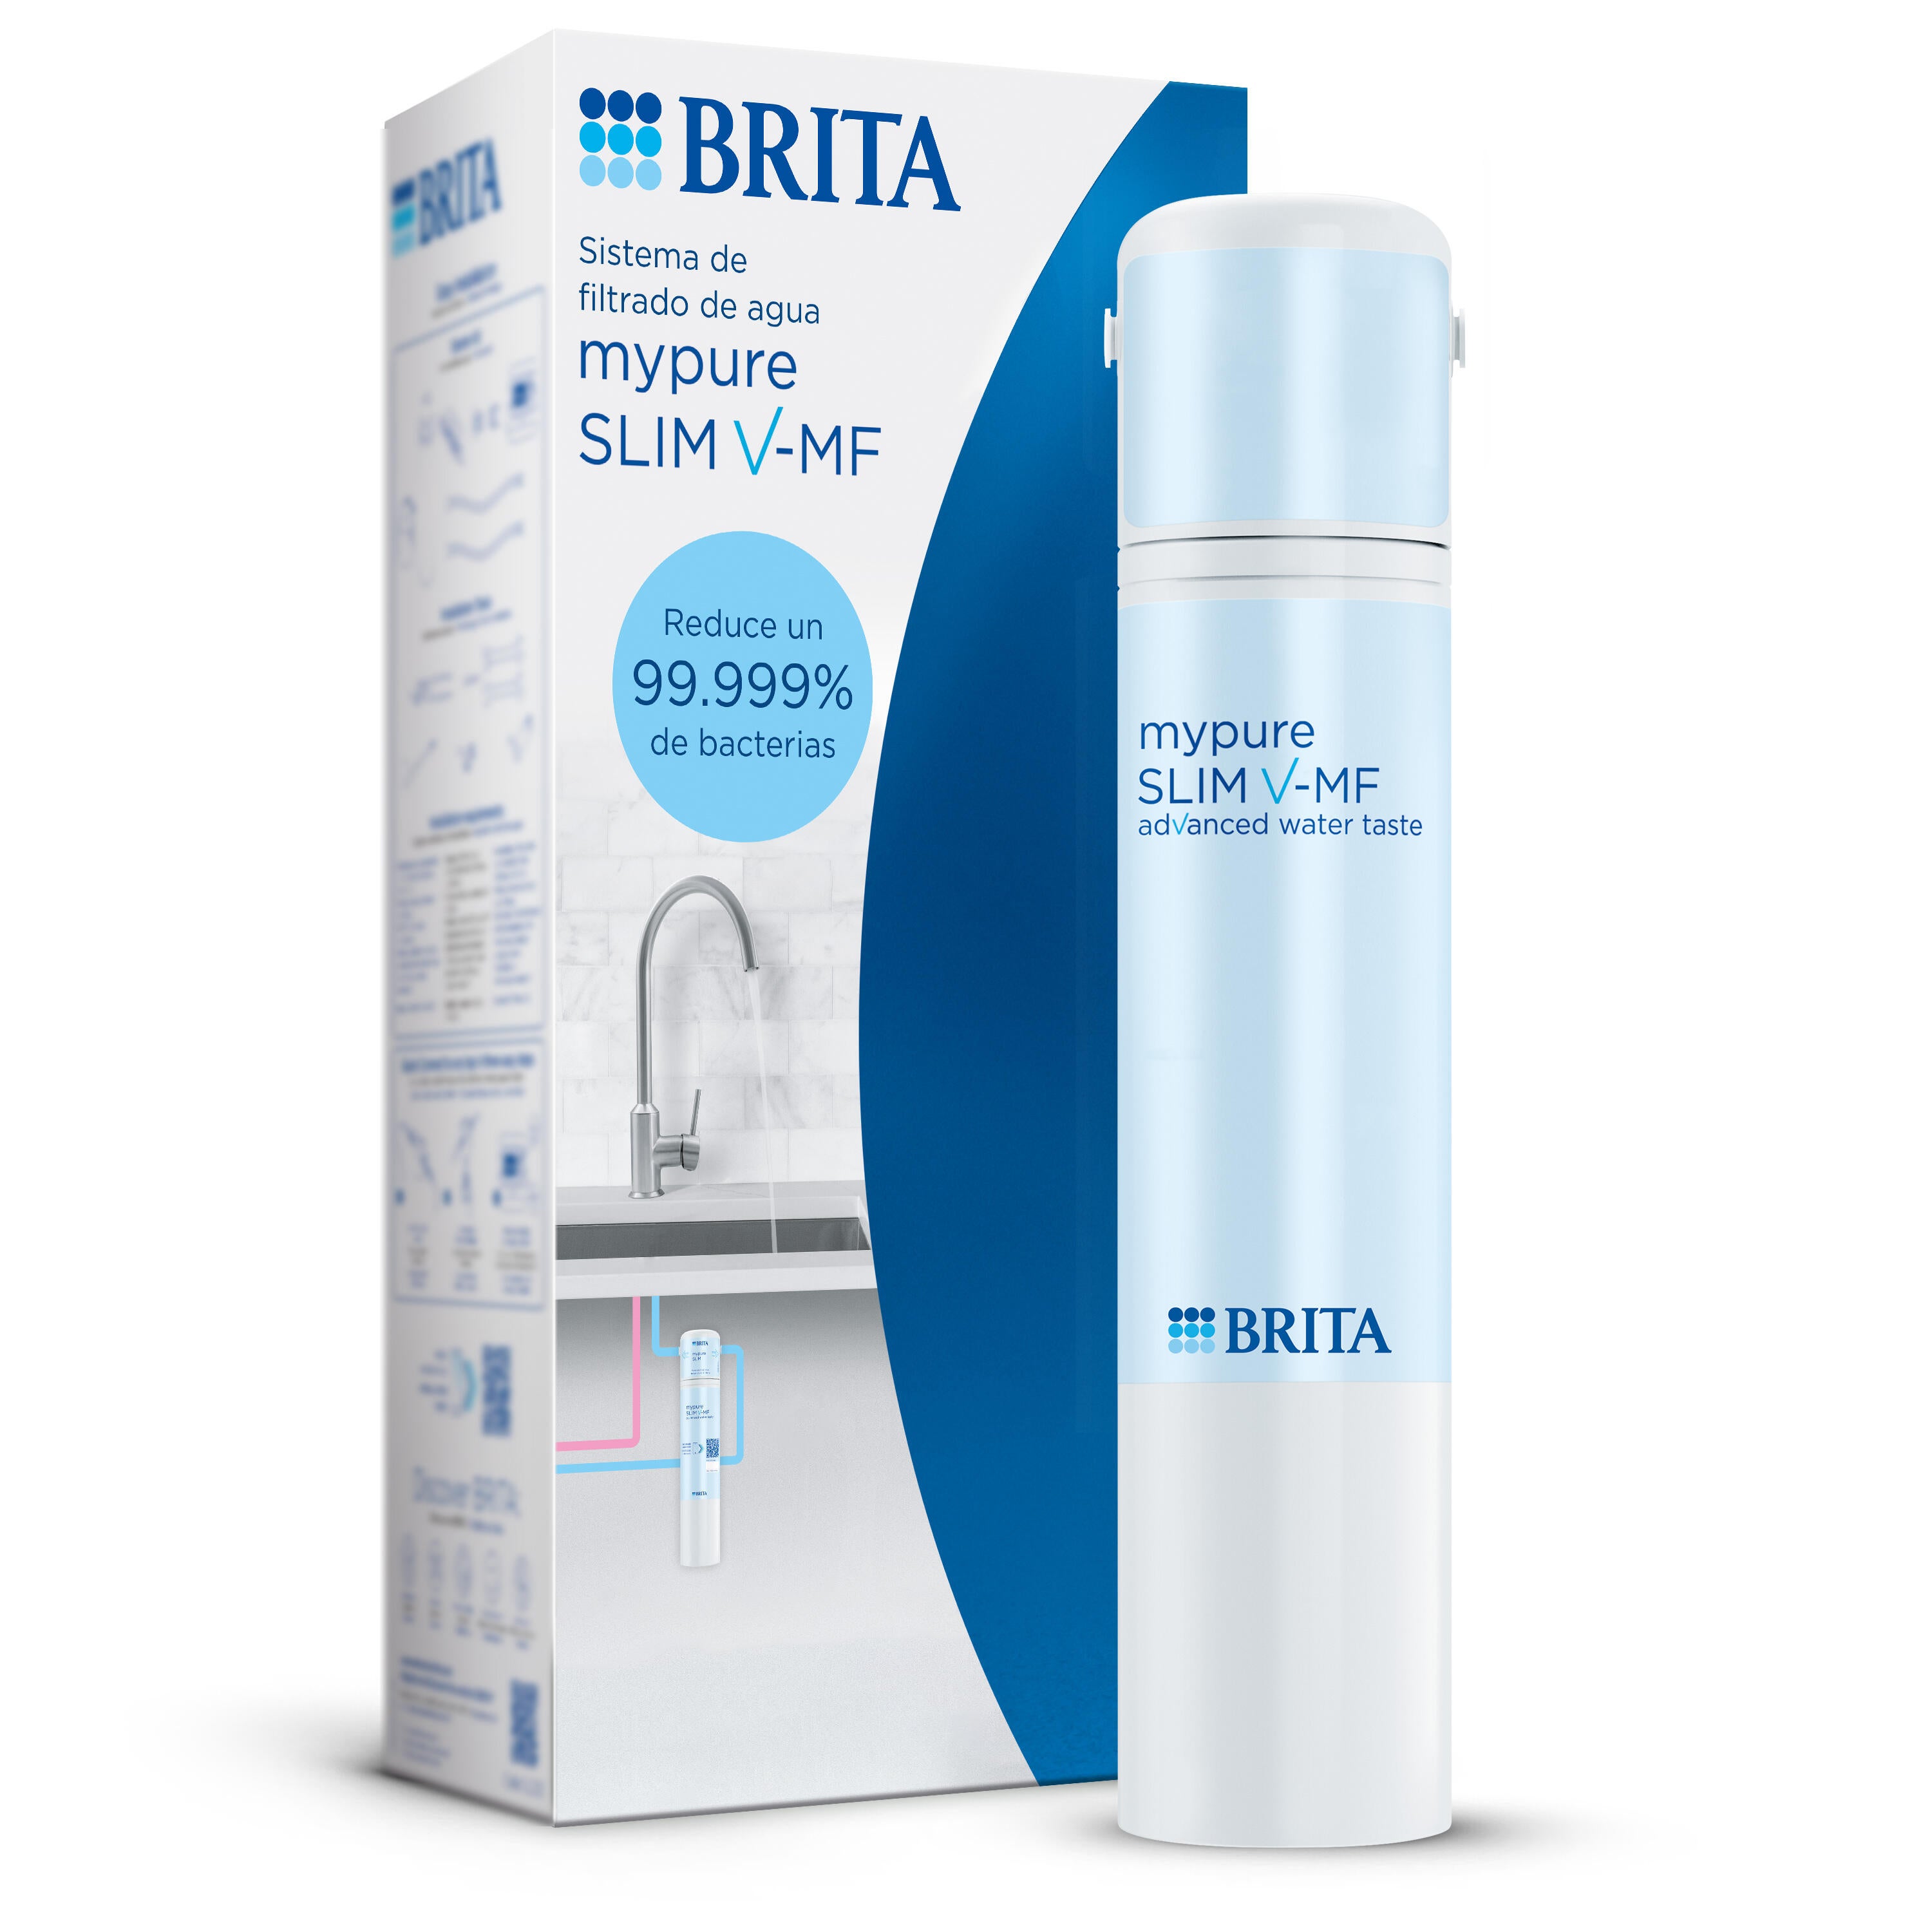 Brita Filtro de agua para fregadero, sistema de filtración de agua